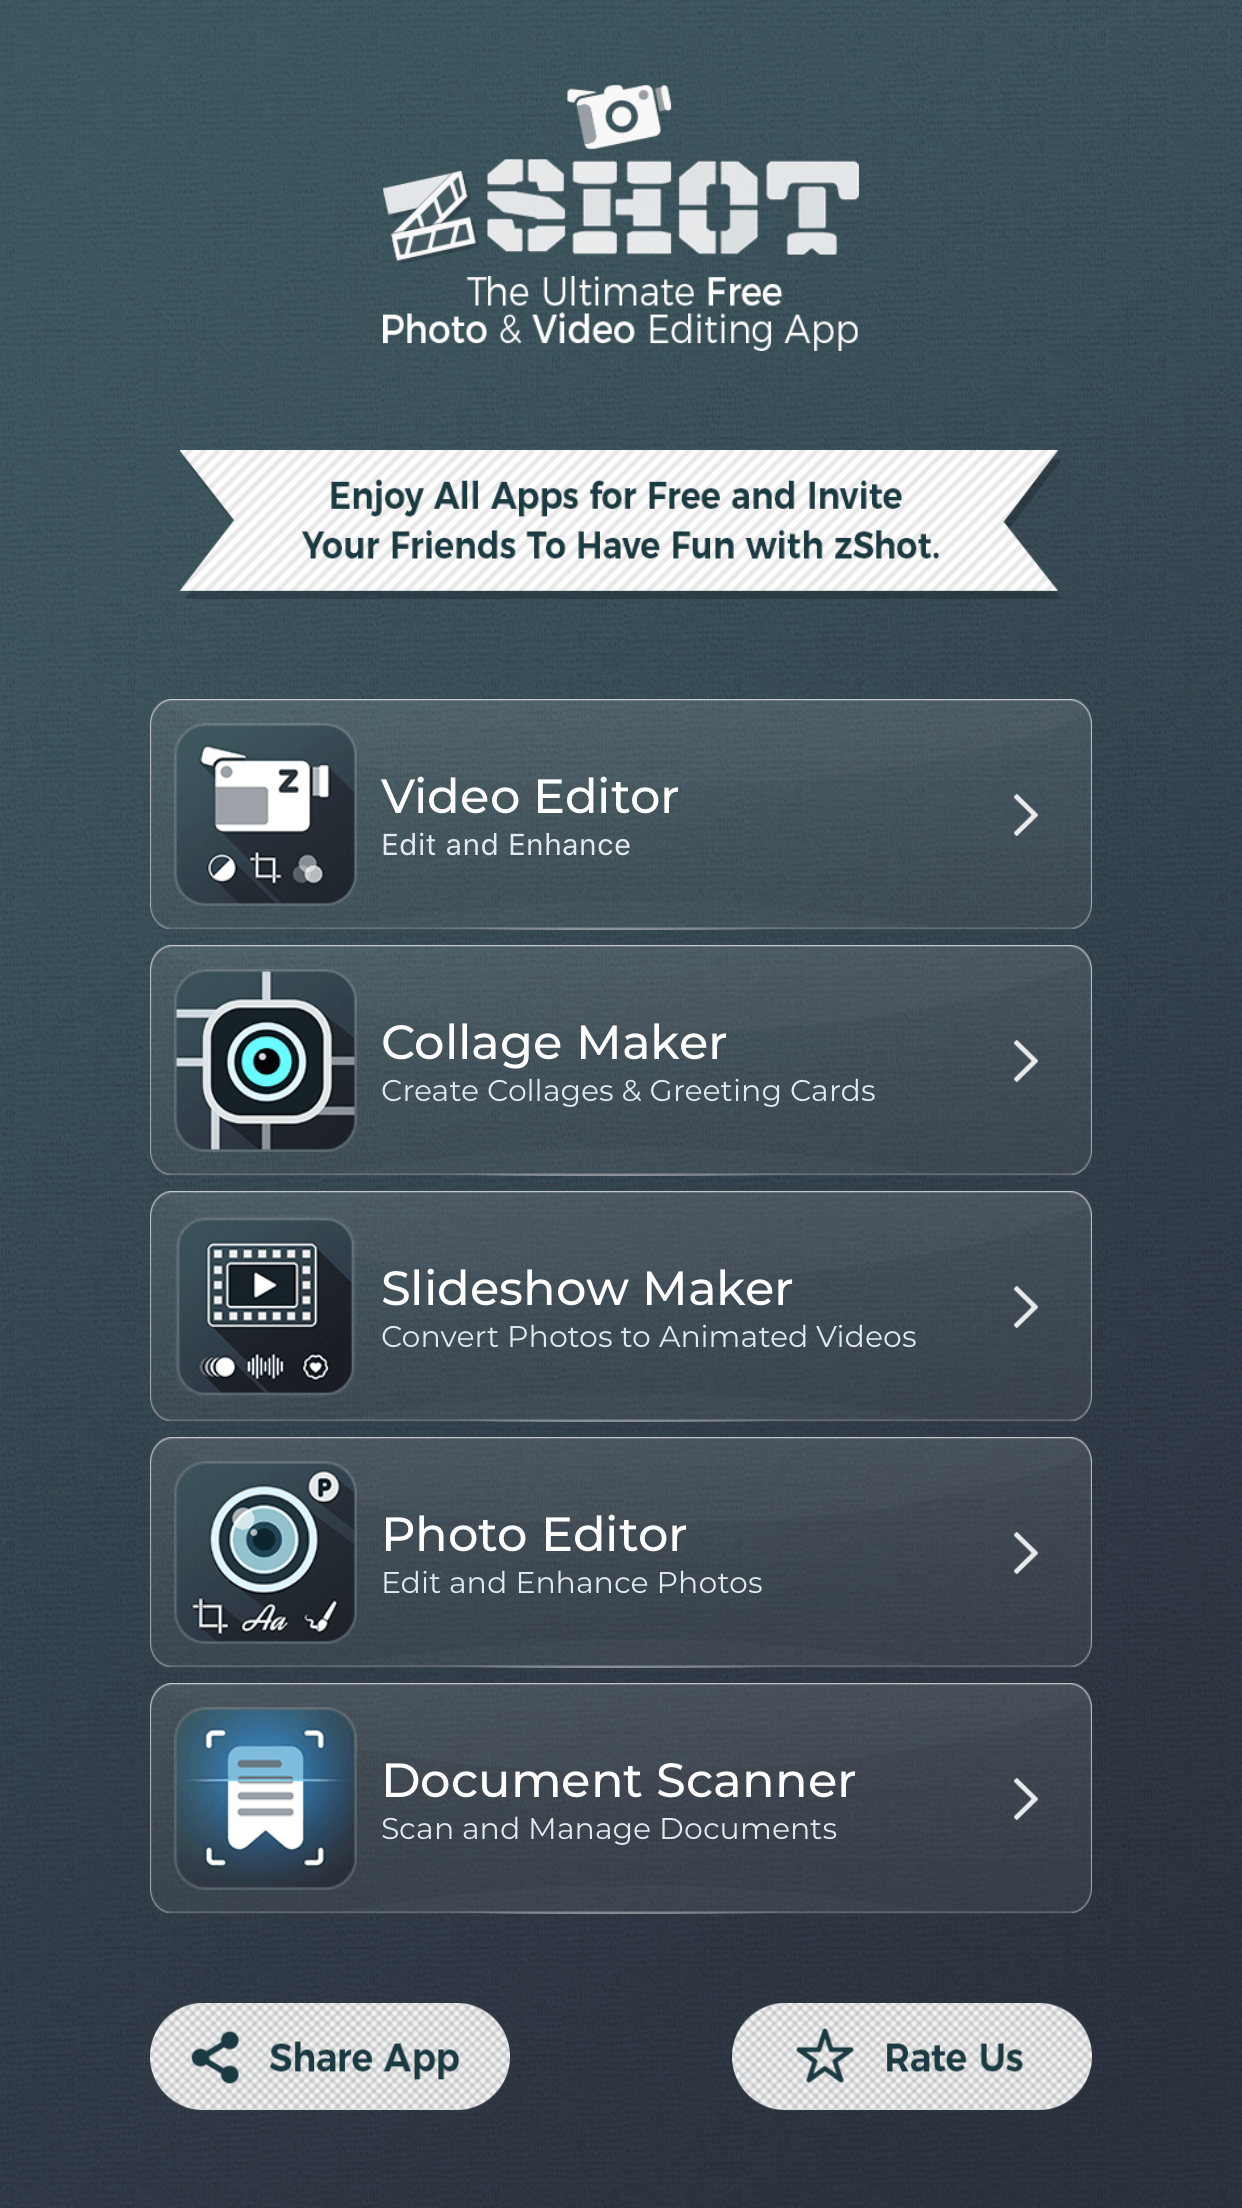 Enjoy five amazing apps with zShot app.